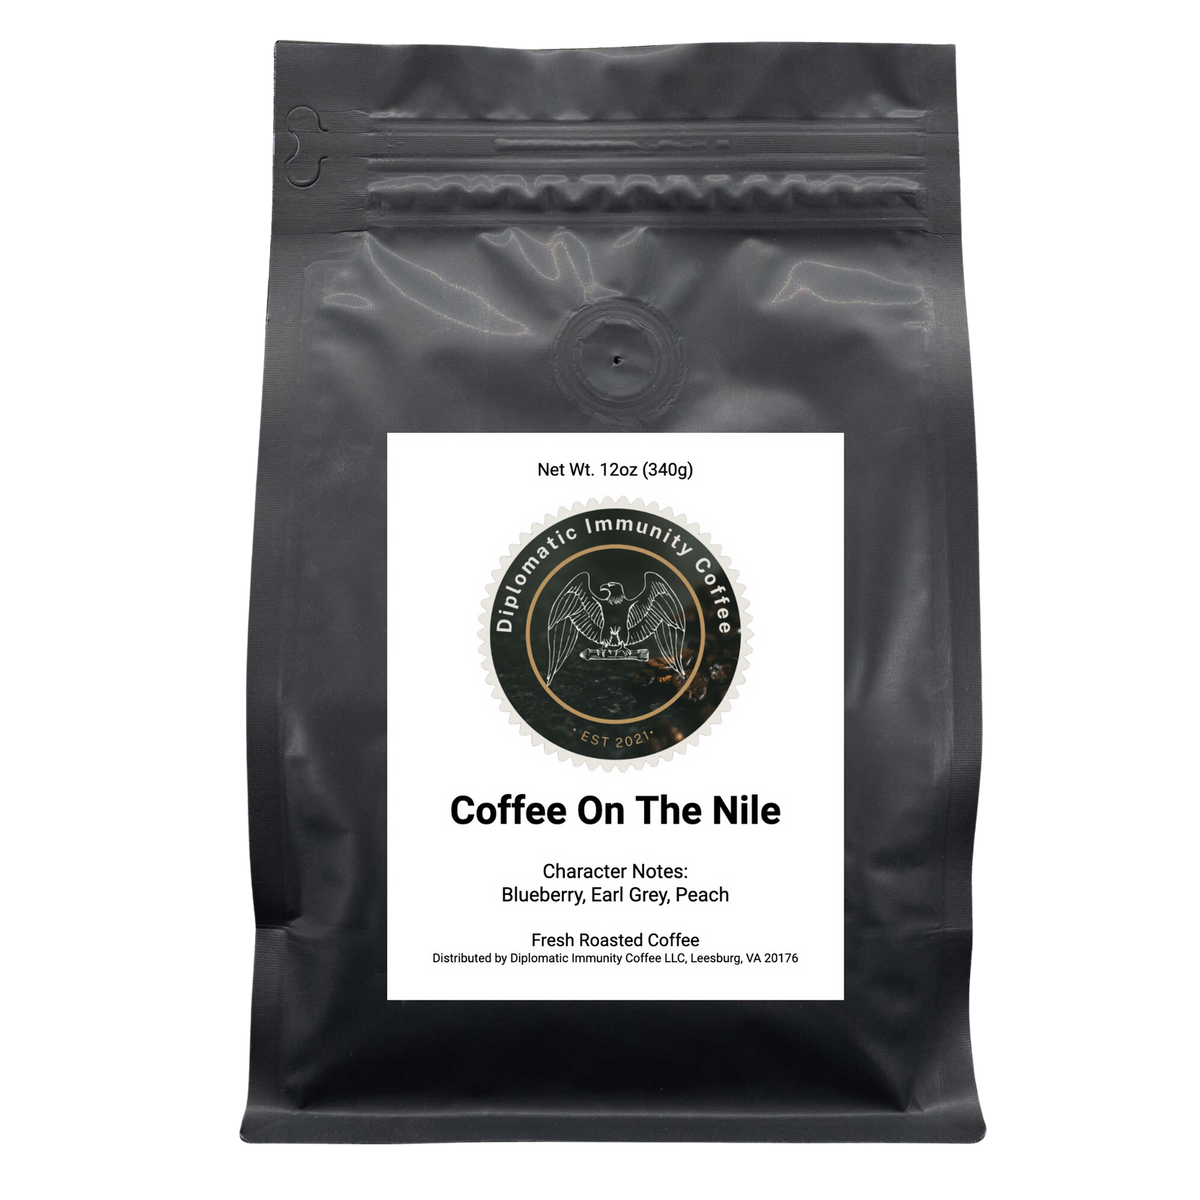 COFFEE ON THE NILE - Light Medium Roast - Country: Uraga, Ethiopia - Flavor Notes: Blueberry, Earl Grey, Peach